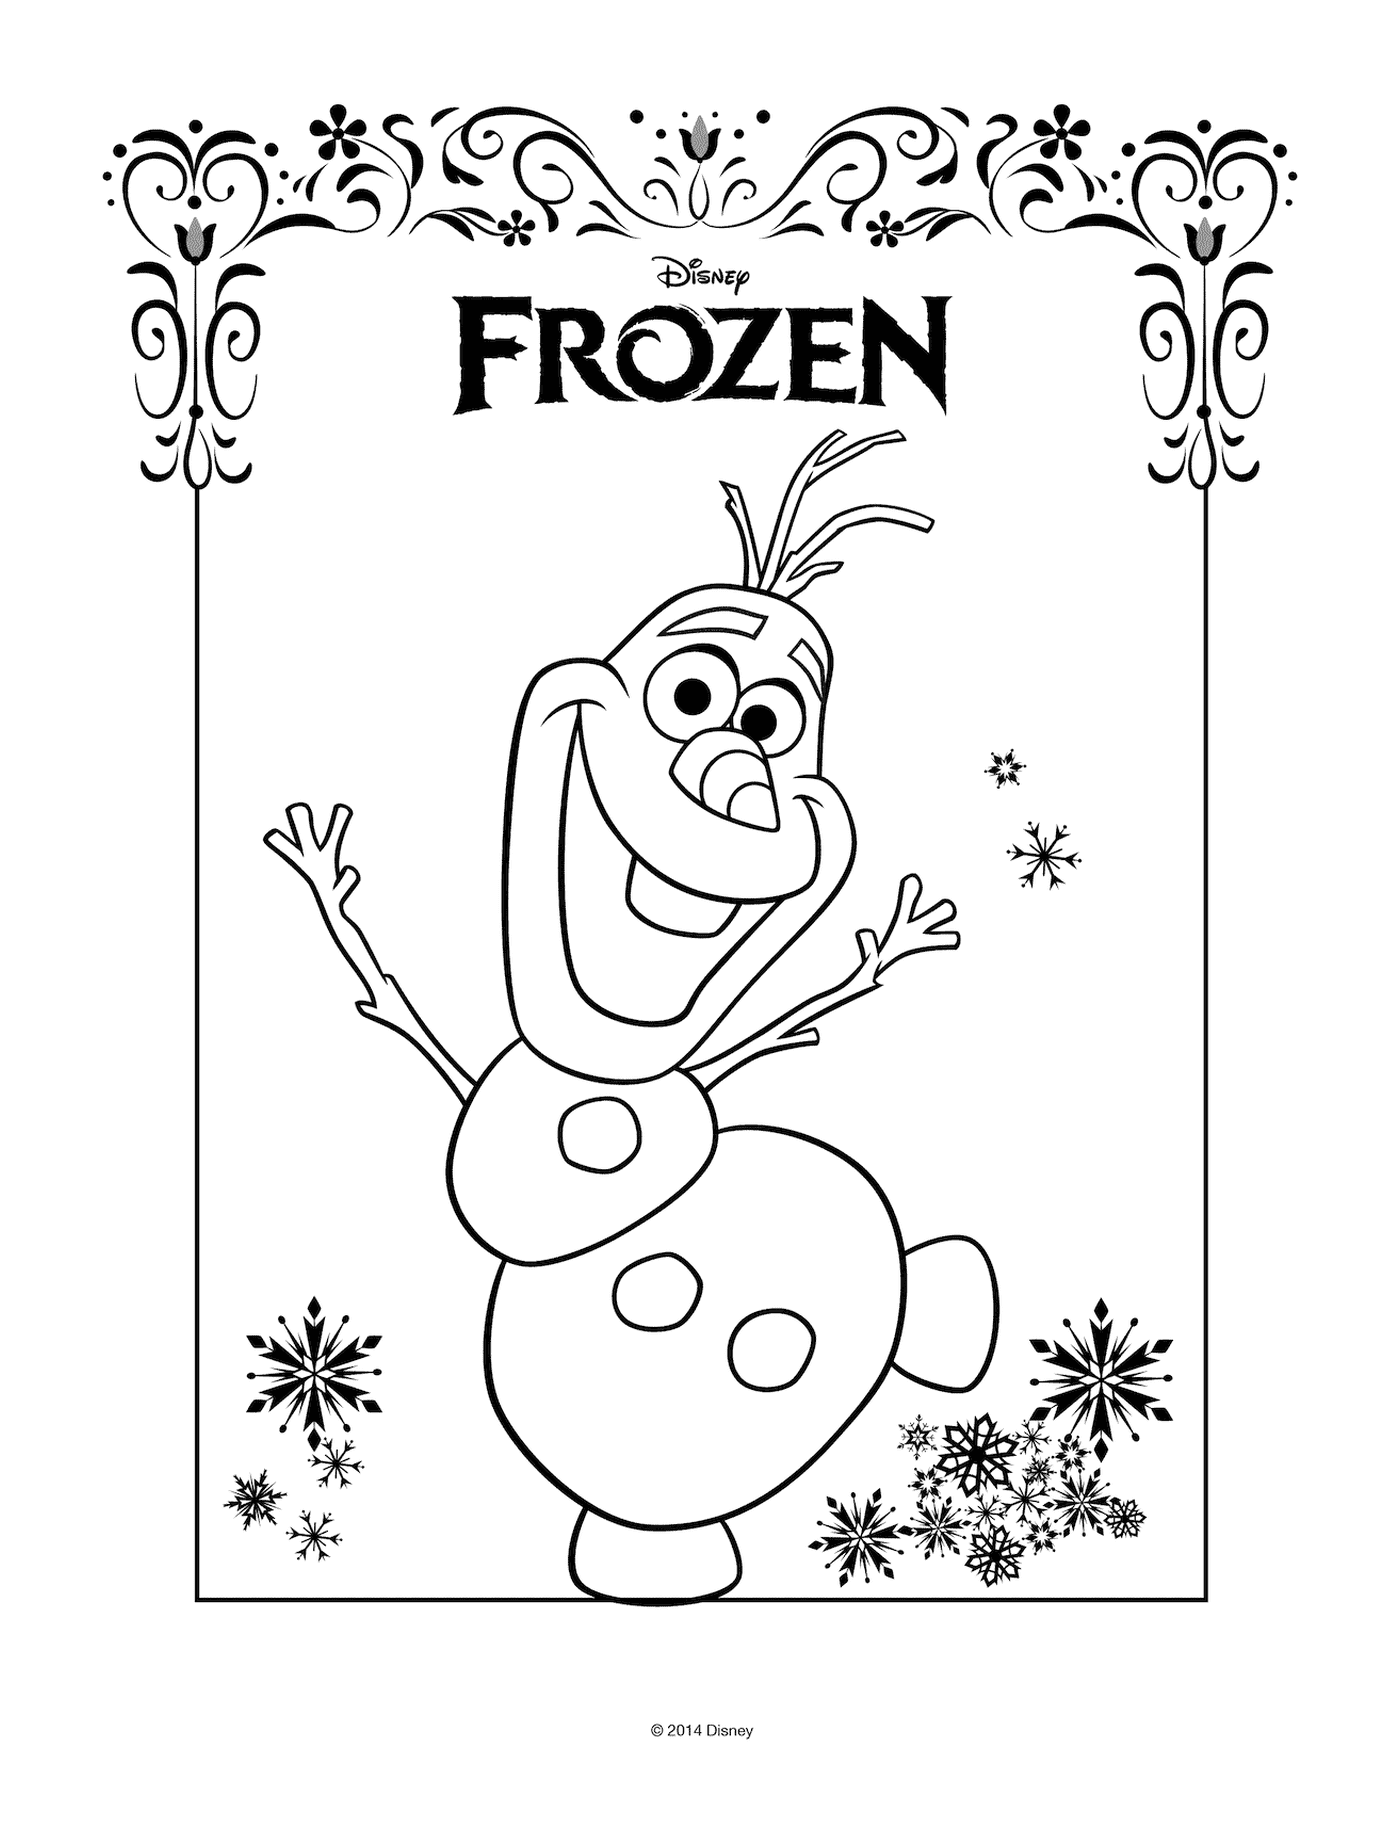  Olaf mit Disneys Frozen Logo 